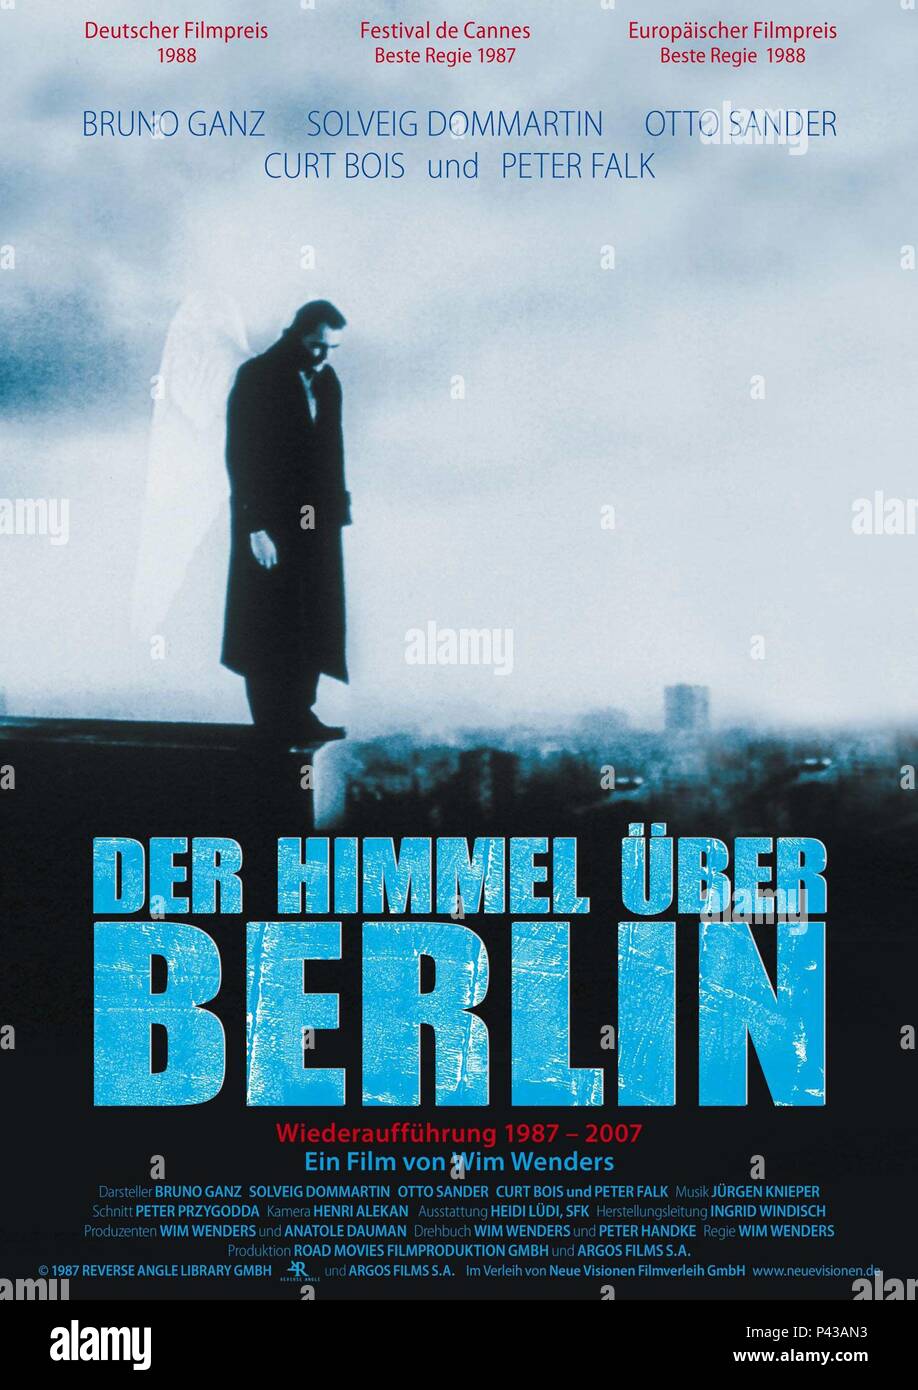 original-film-title-der-himmel-uber-berlin-english-title-wings-of-desire-film-director-wim-wenders-year-1987-credit-westdeutscher-rundfunk-album-P43AN3.jpg